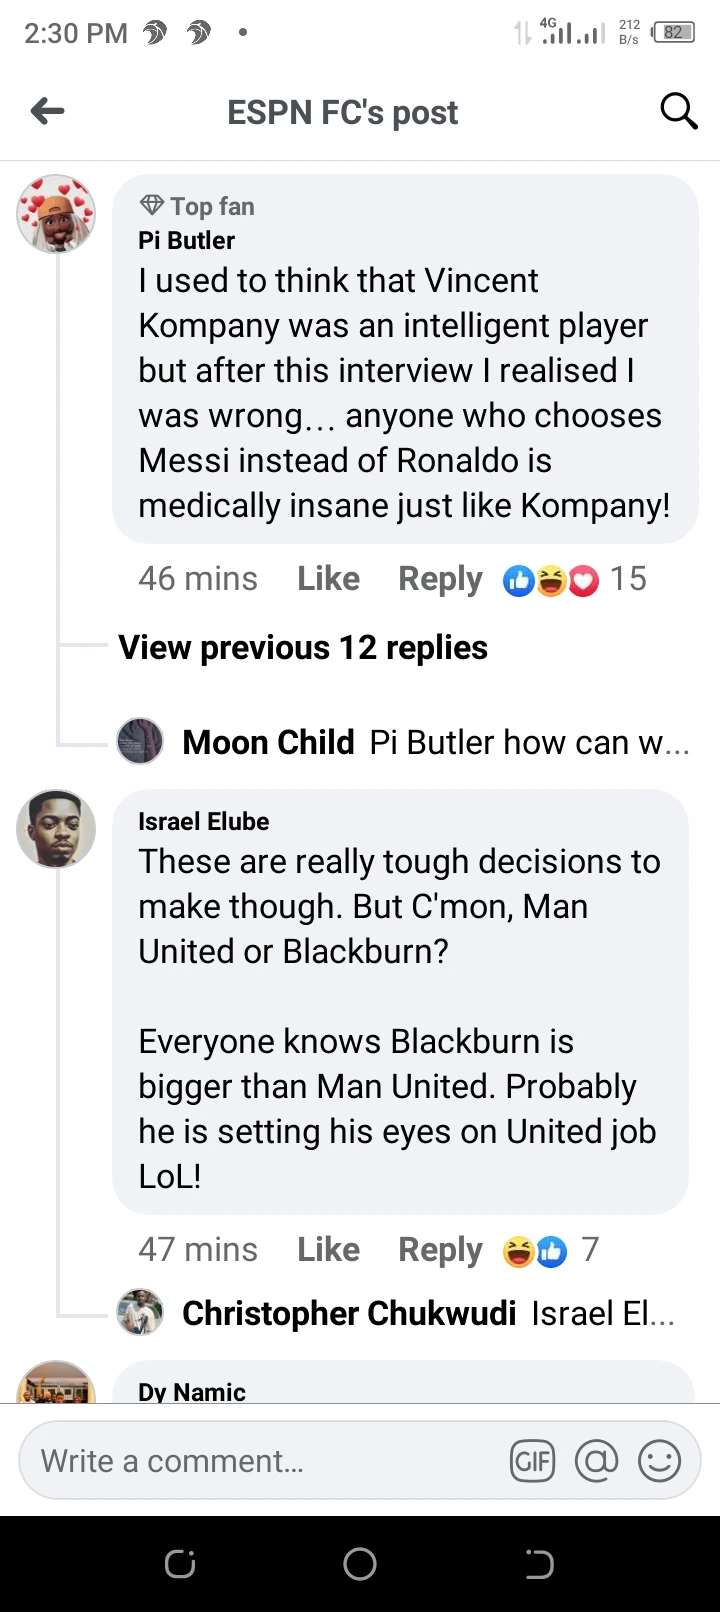 Checkout Kompany's response when asked to pick between Man United and Blackburn